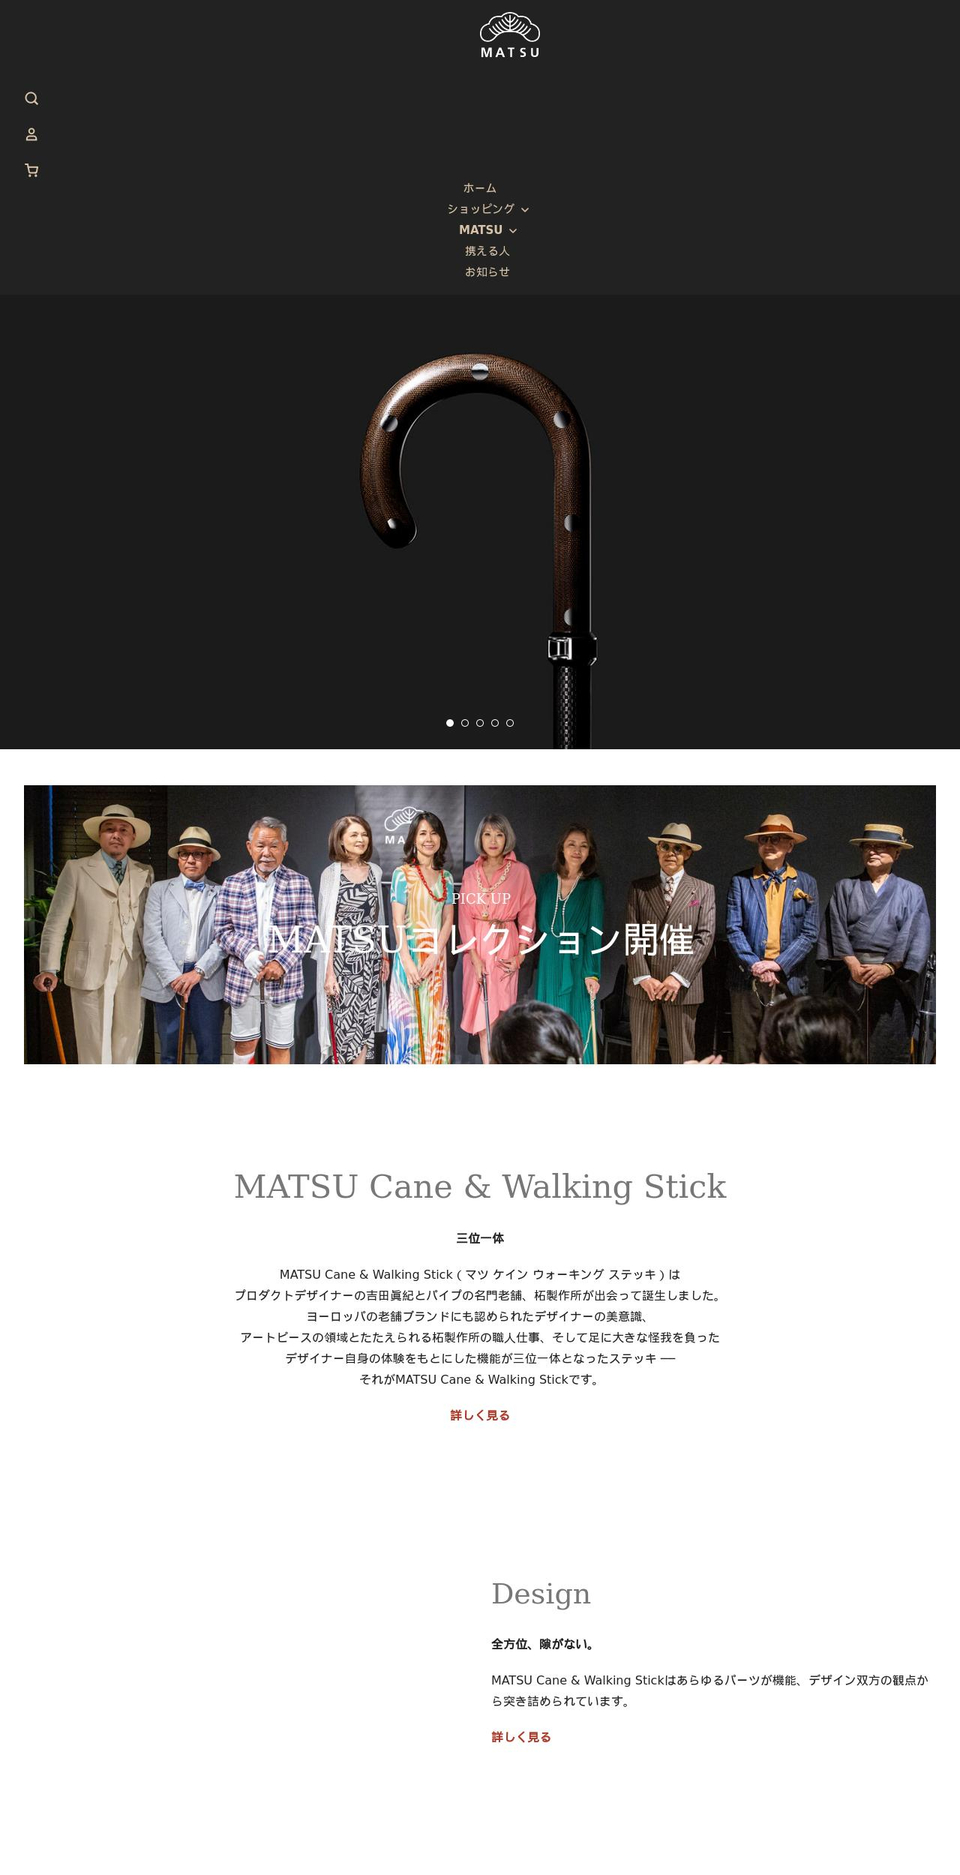 ma-tsu.jp shopify website screenshot